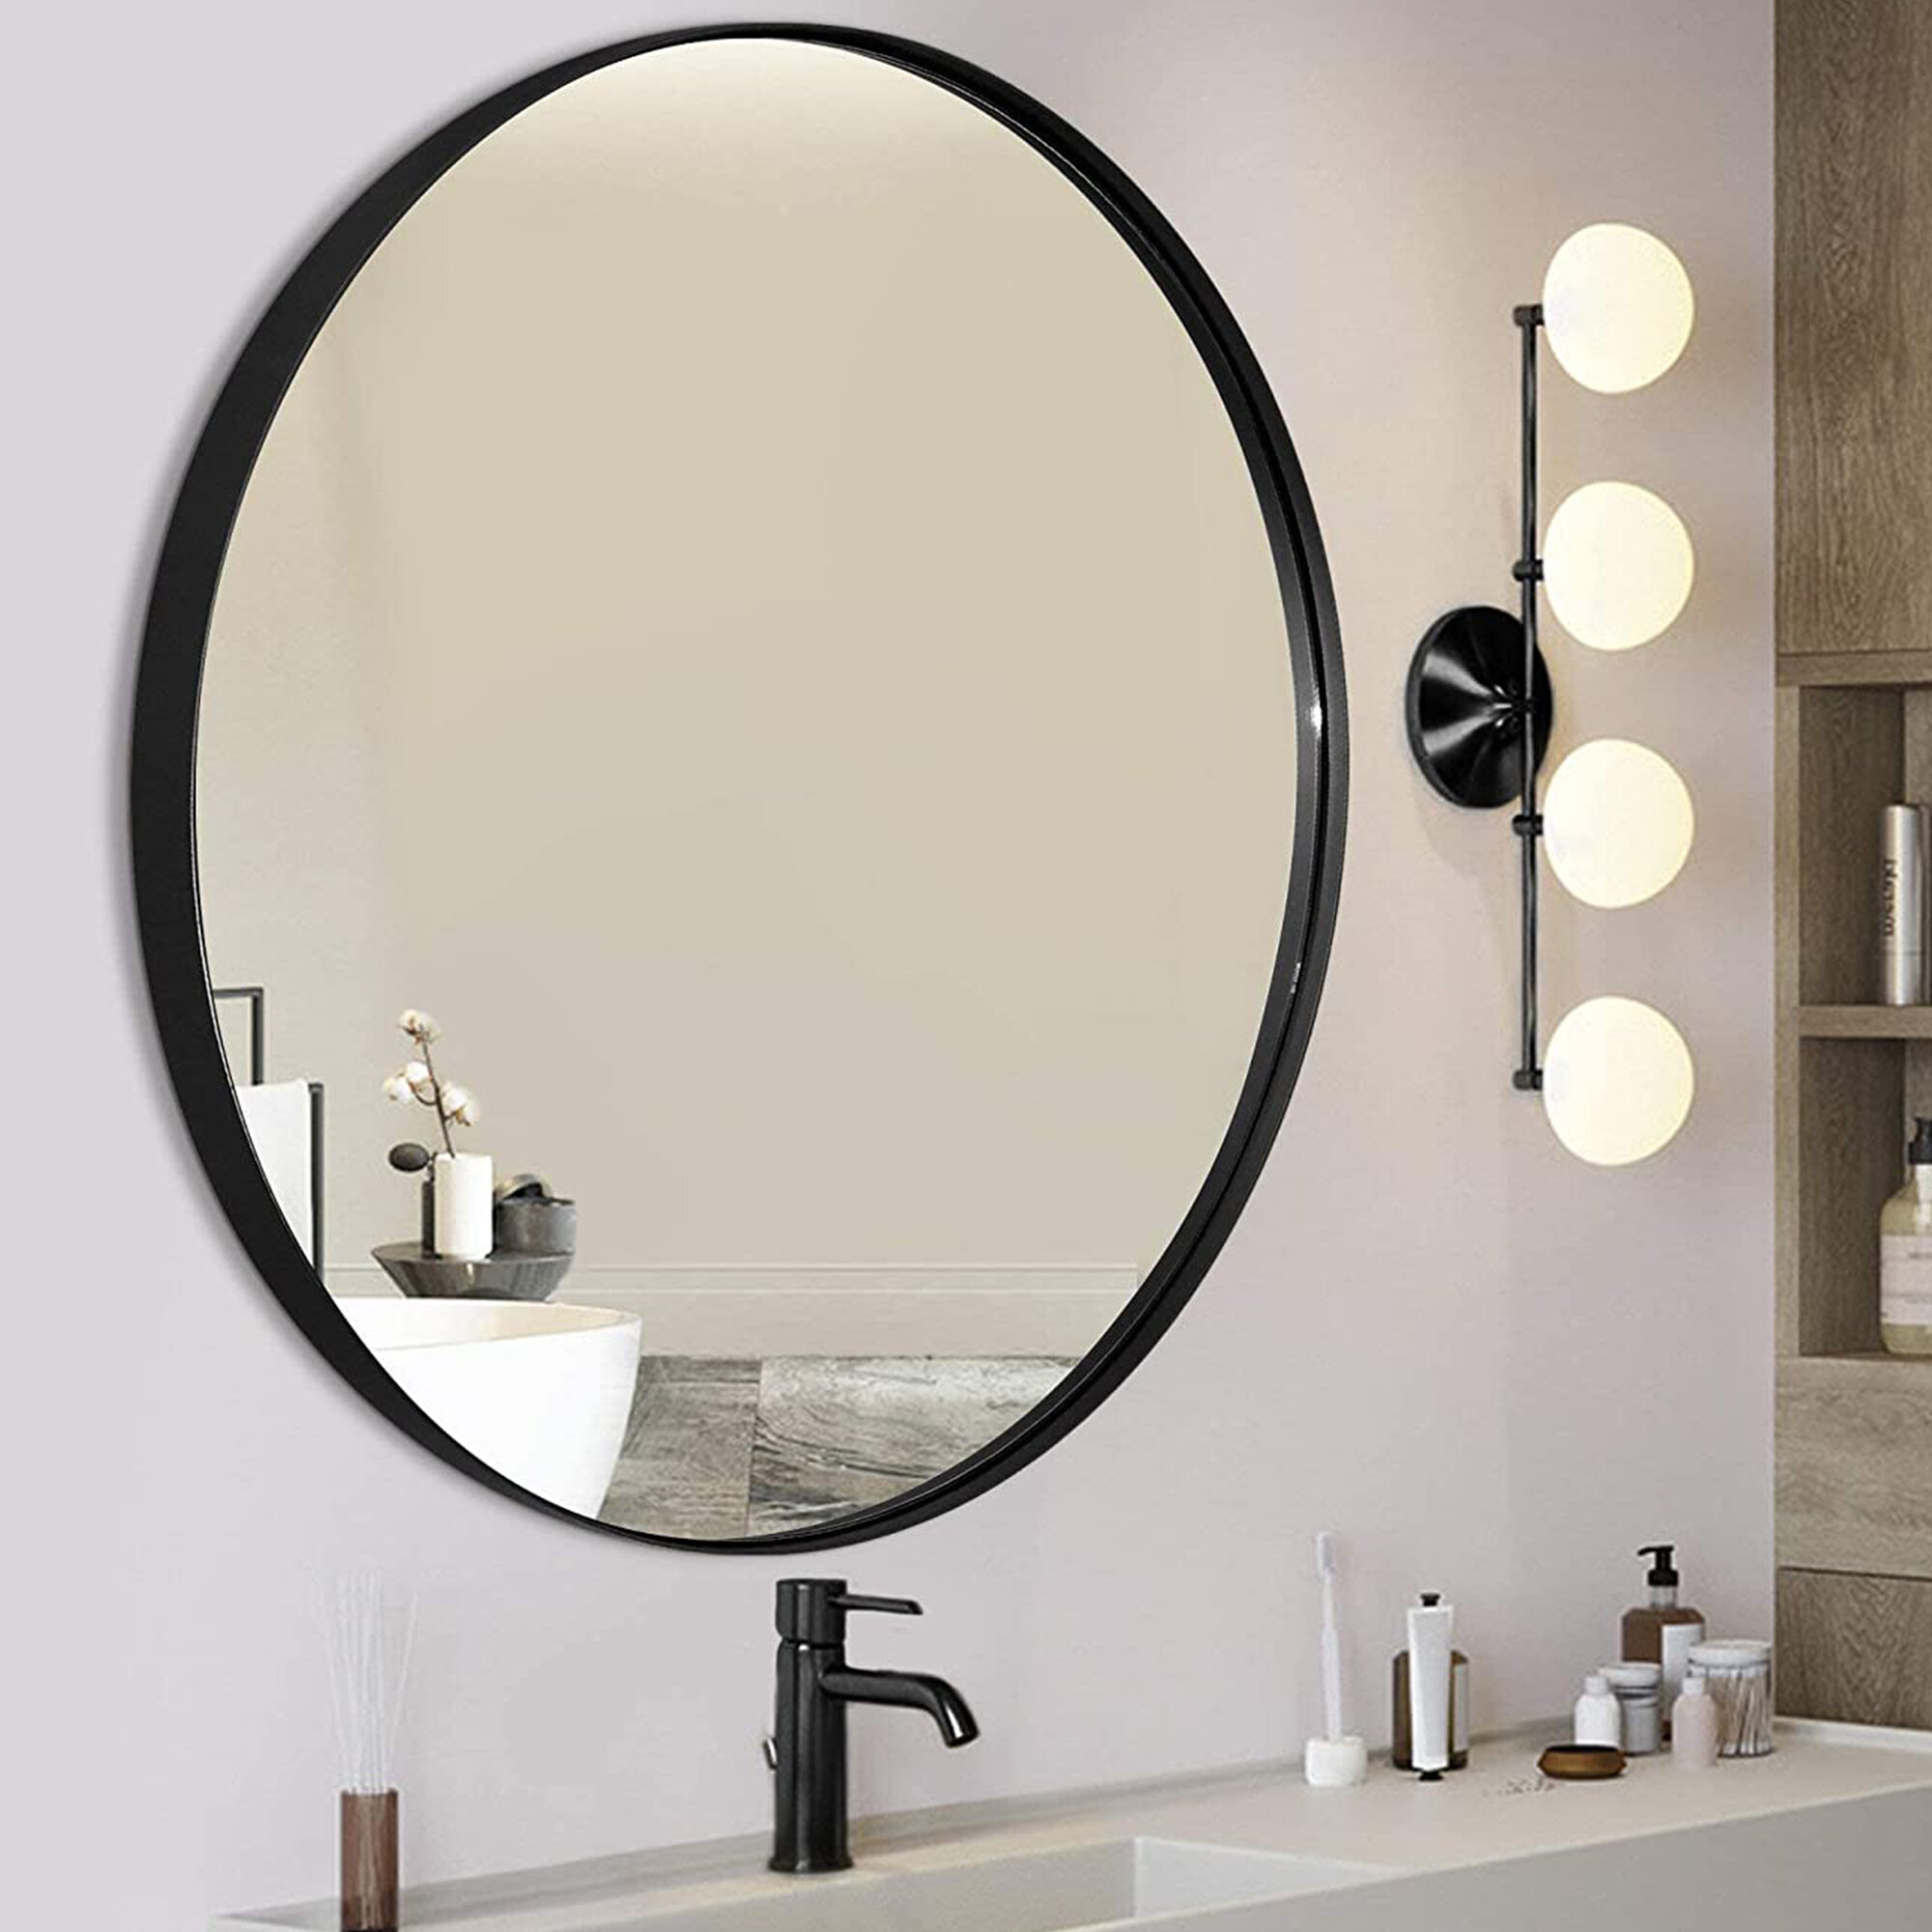 Corrigan Studio® Ishbel 32 Inch Wall Circle Mirror Large Round Black  Circular Mirror,Bathroom Make Up Vanity Mirror